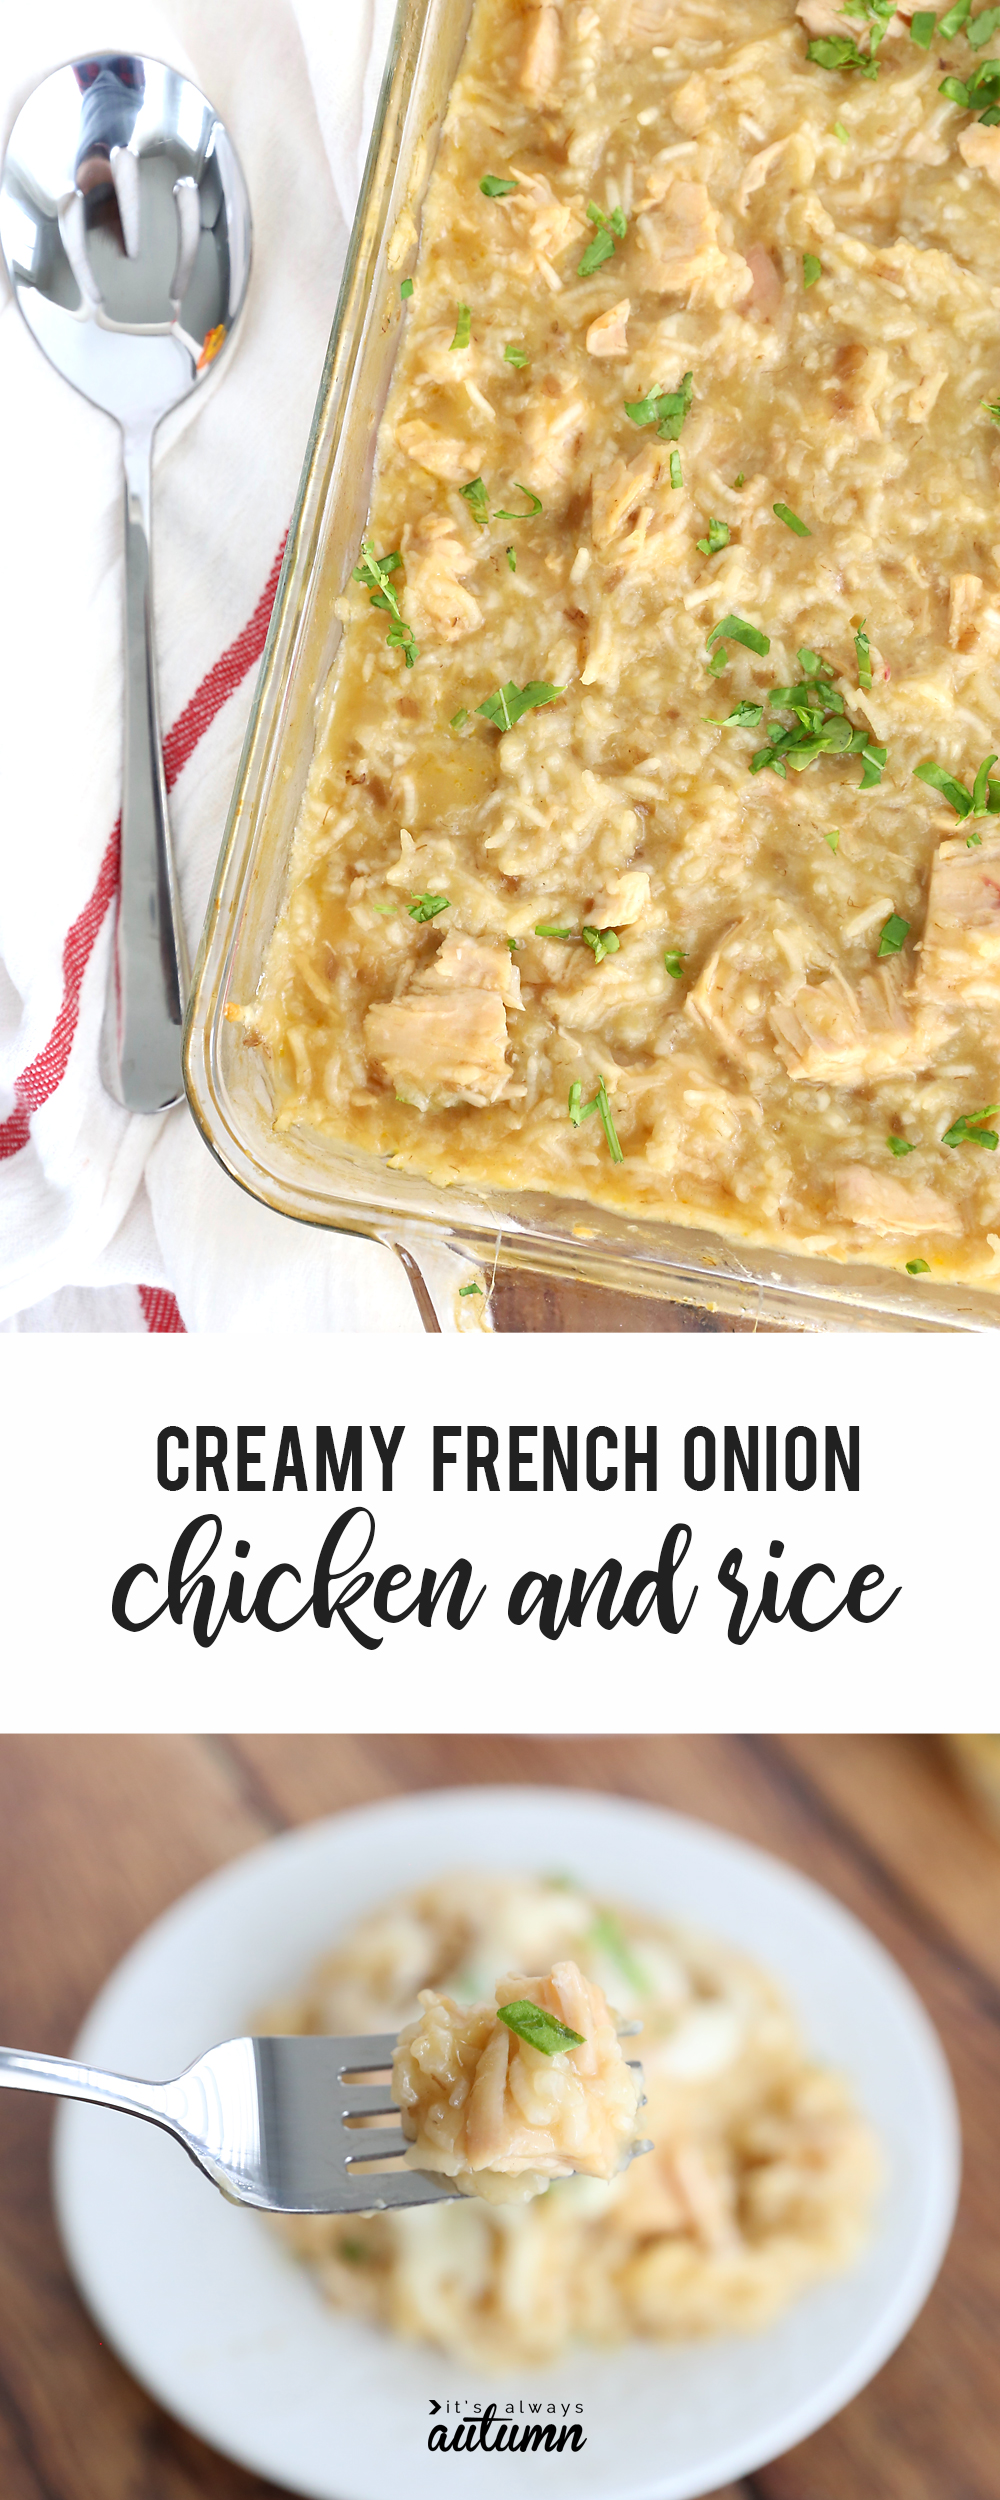 Creamy french onion chicken and rice casserole